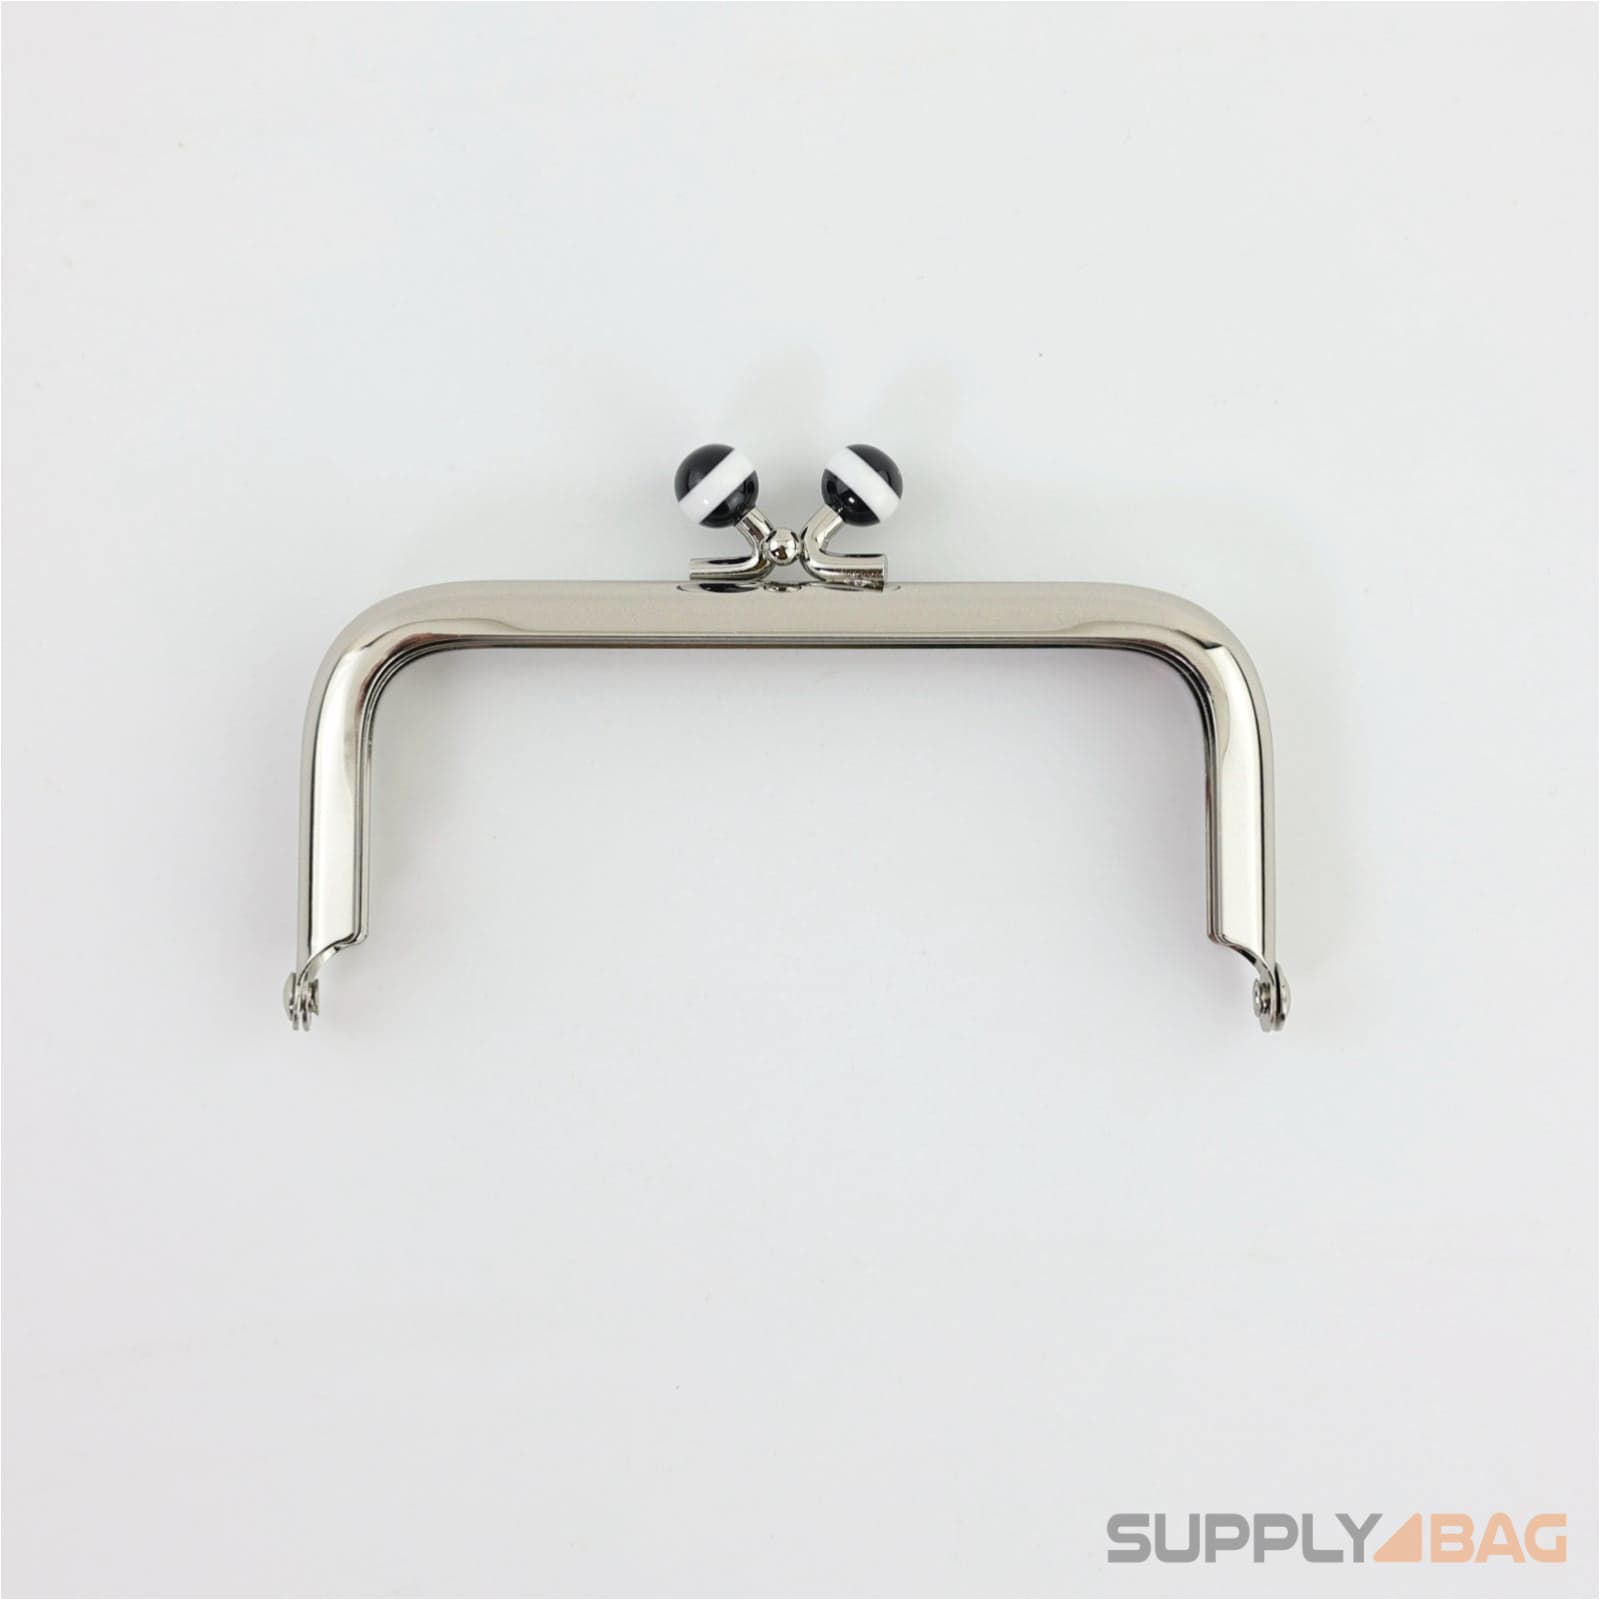 4 x 1 3/4 inch - acrylic clasp - silver metal purse frame